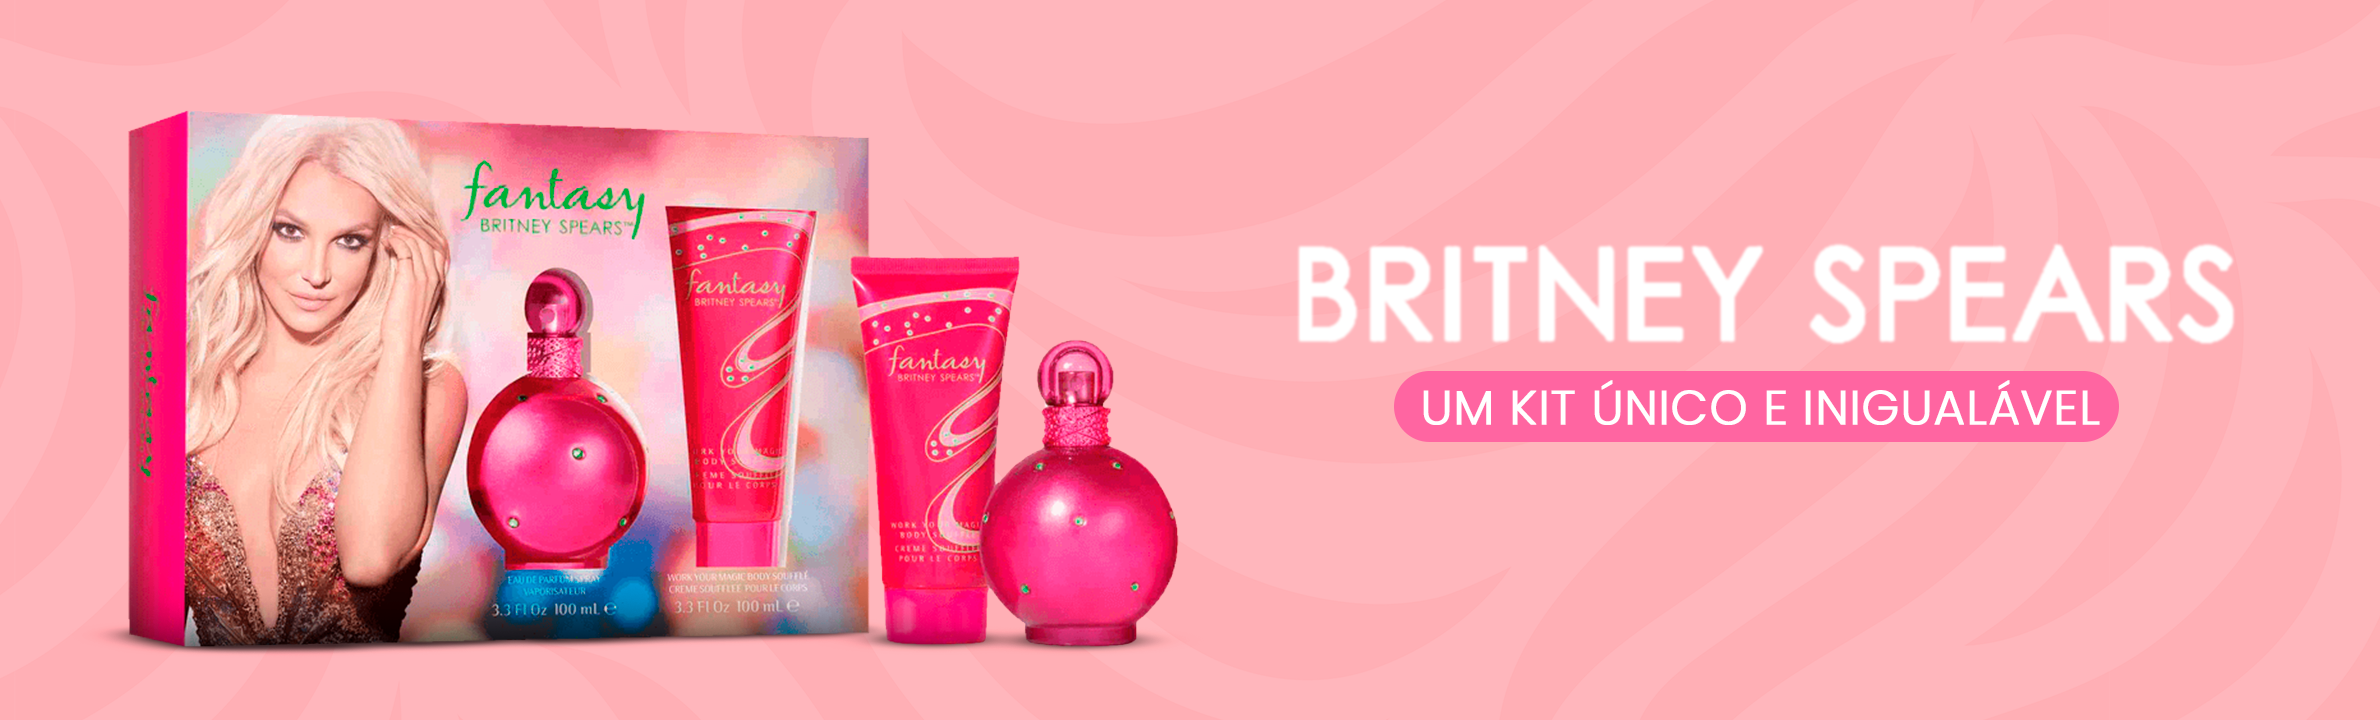 Britney Spears | Lançamento Kit Fantasy